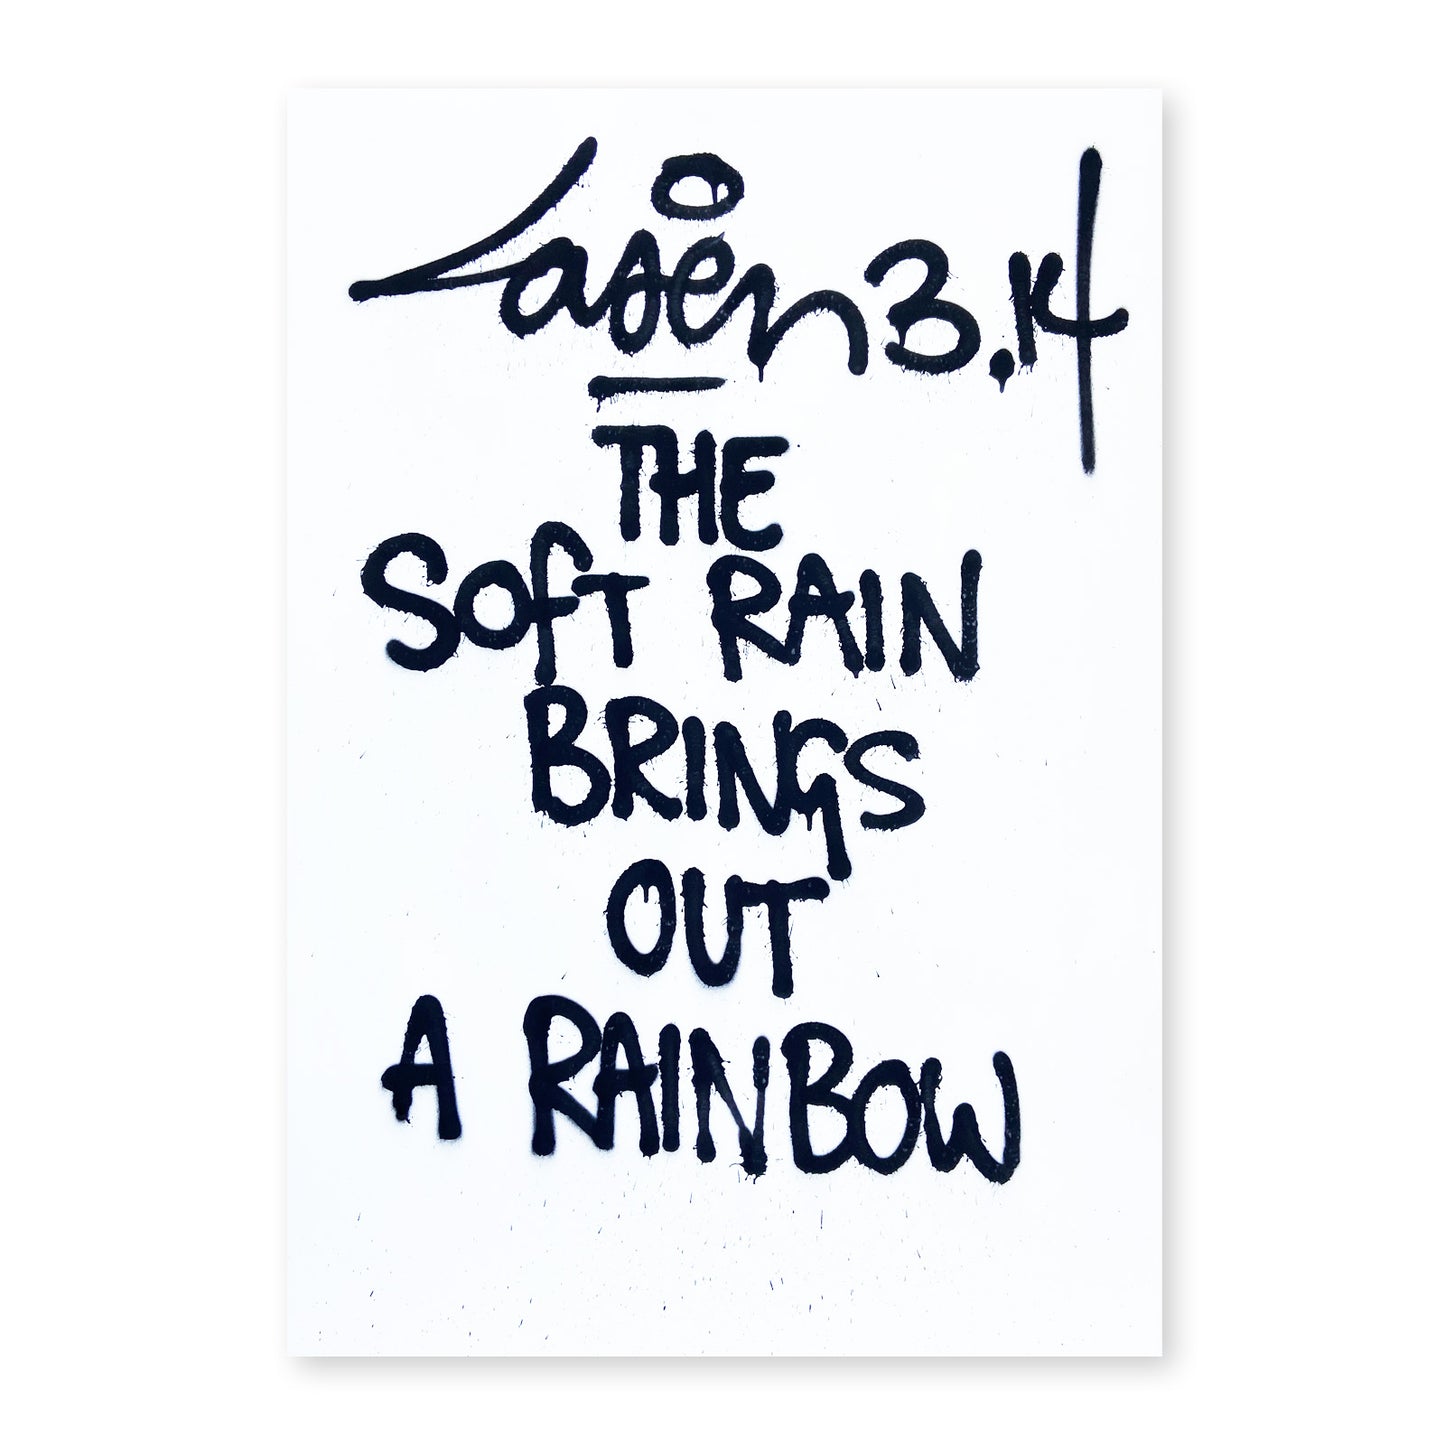 The Soft Rain Brings Out A Rainbow 70x100